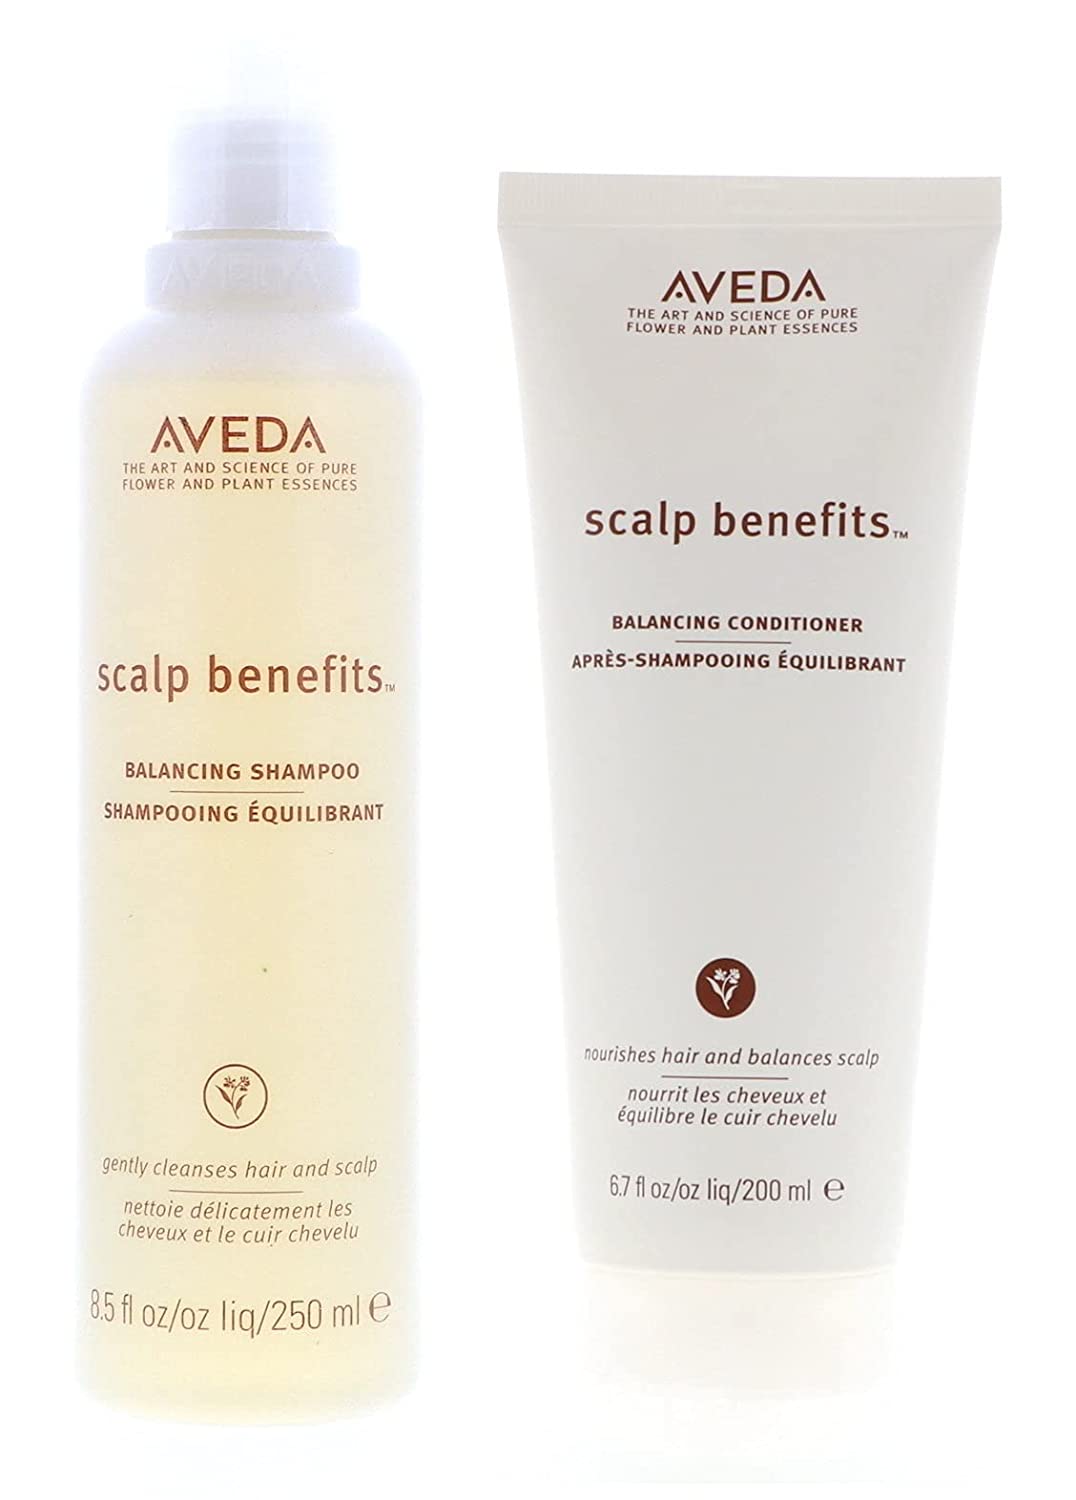 Aveda Scalp Benefits Balancing Shampoo and Conditioner